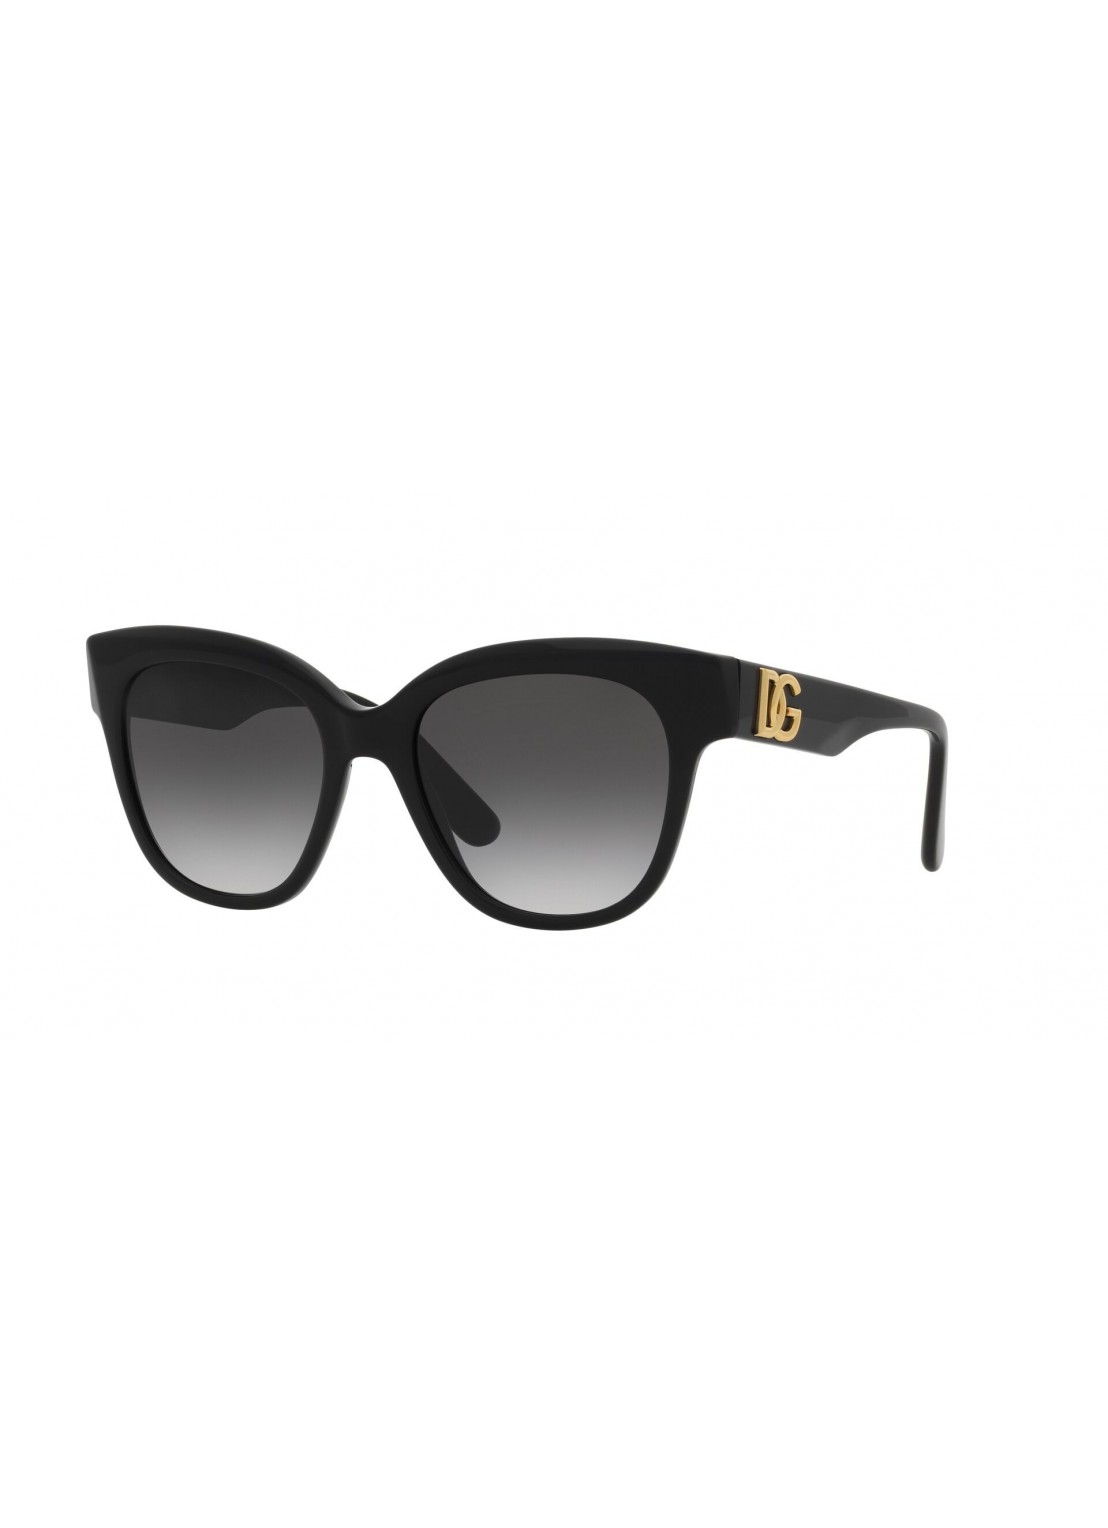 Gafas dolce&gabbana sunglasses woman 0dg4407 0dg4407 501 8g talla transparente
 